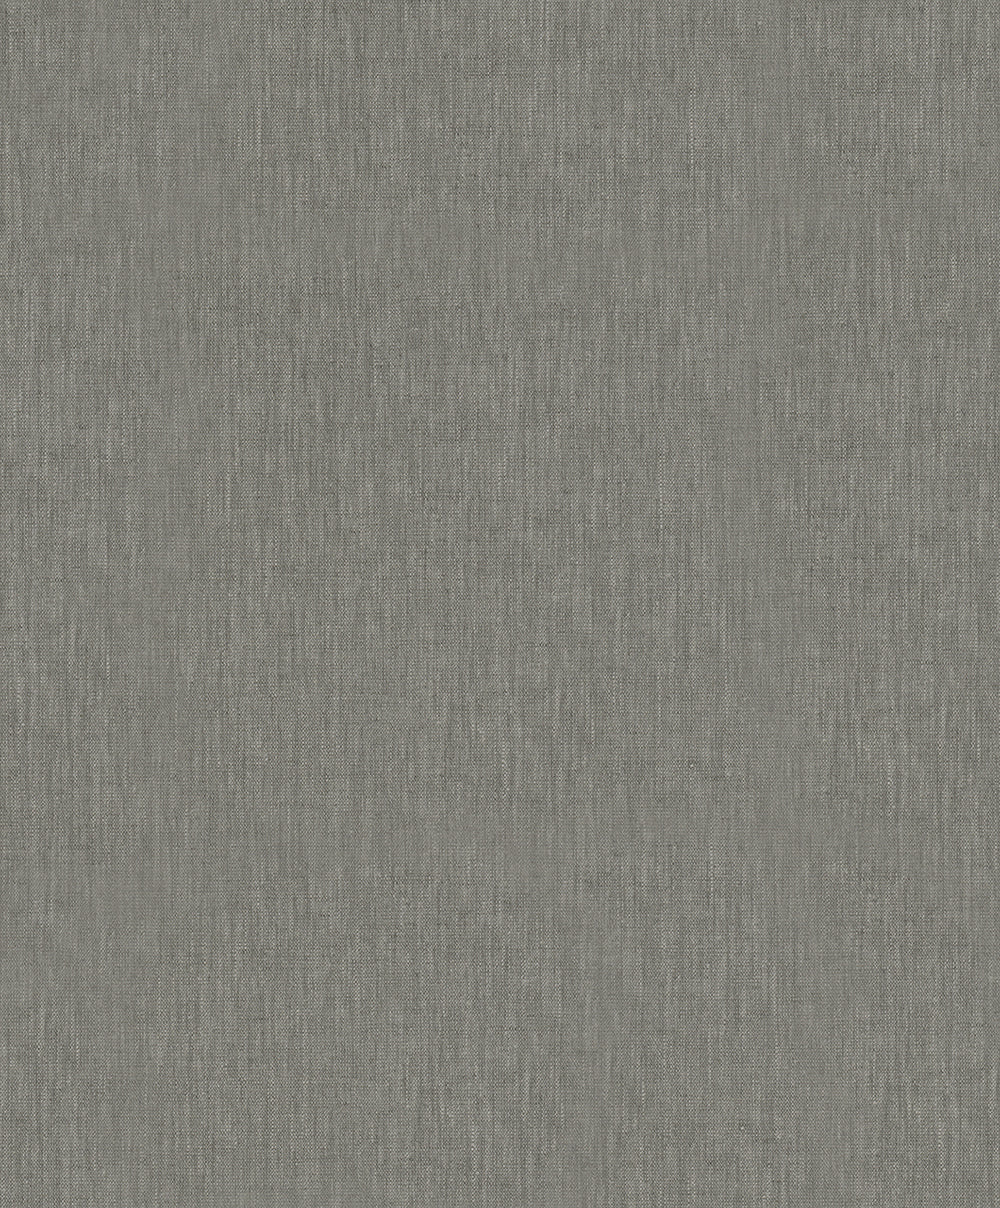 Botanica - Textured Plains plain wallpaper Marburg Roll Dark Grey  33330